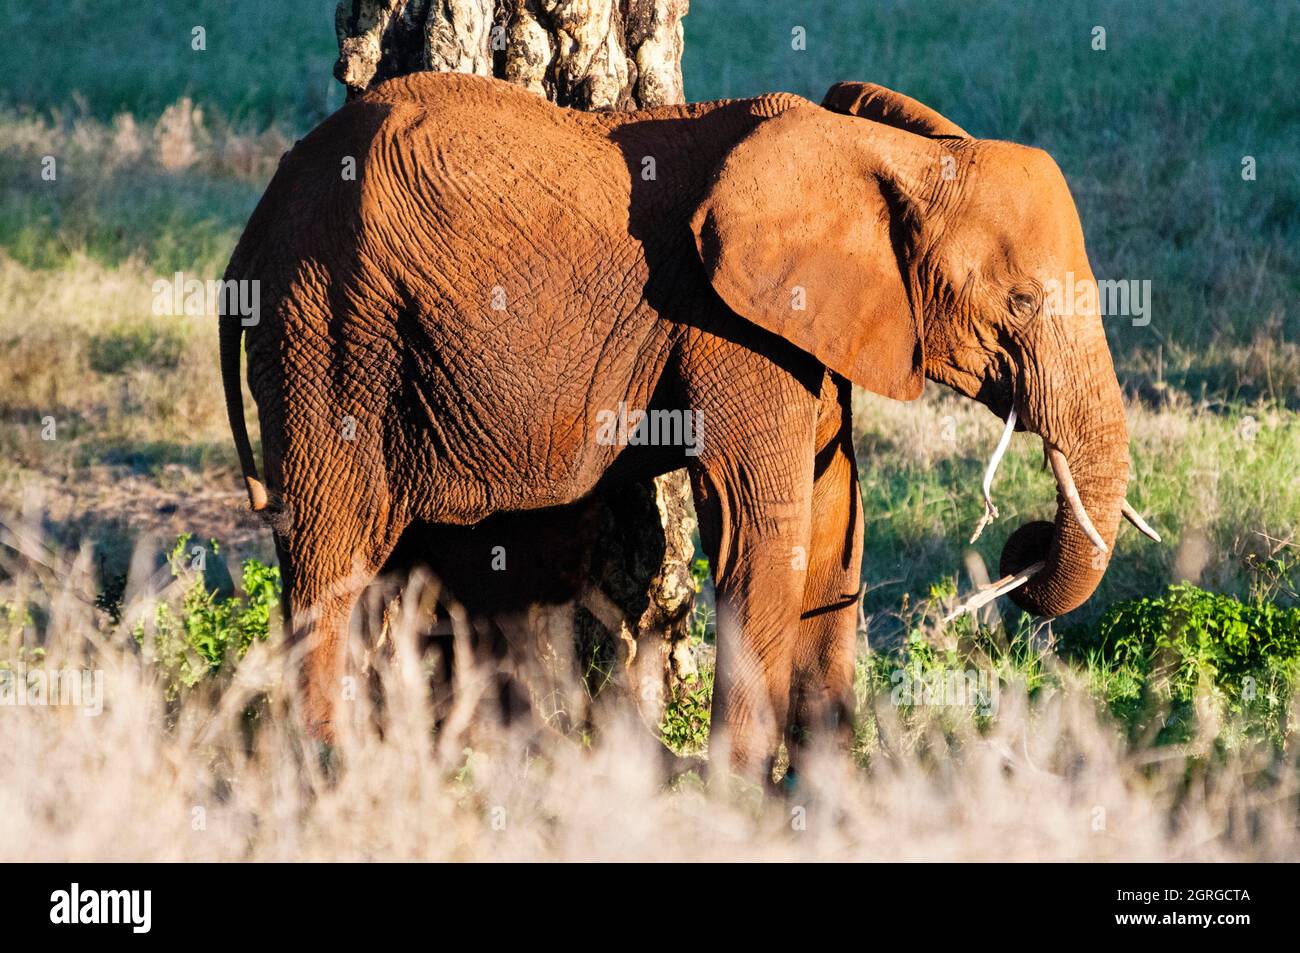 Kenya, Taita Hills Wildlife Sanctuary, One Elephant (Loxodonta africana) Stock Photo